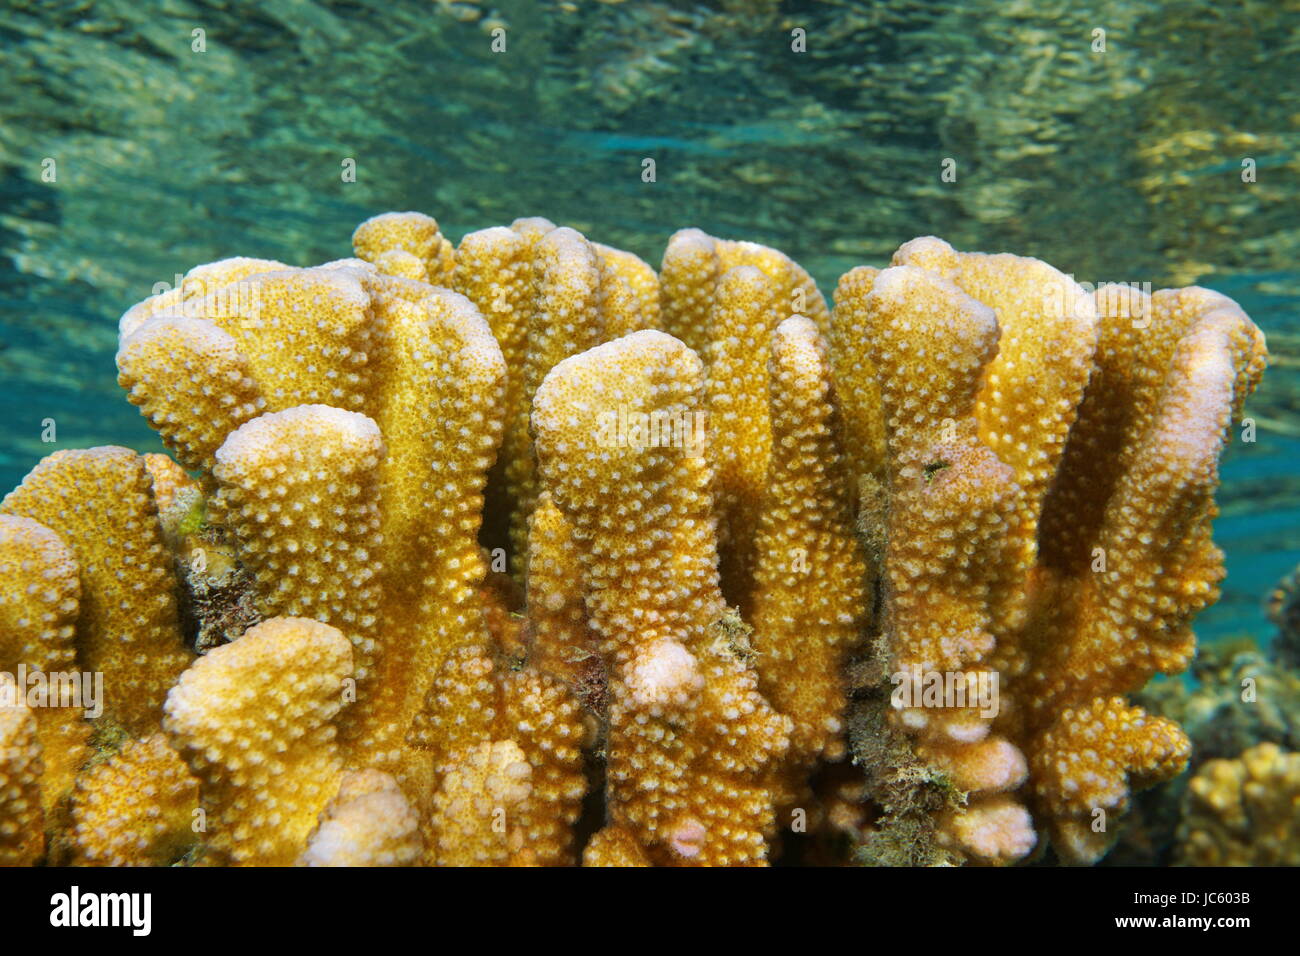 Pocillopora coral close up, commonly called cauliflower coral, Pacific ocean, French Polynesia, lagoon of Bora Bora island Stock Photo